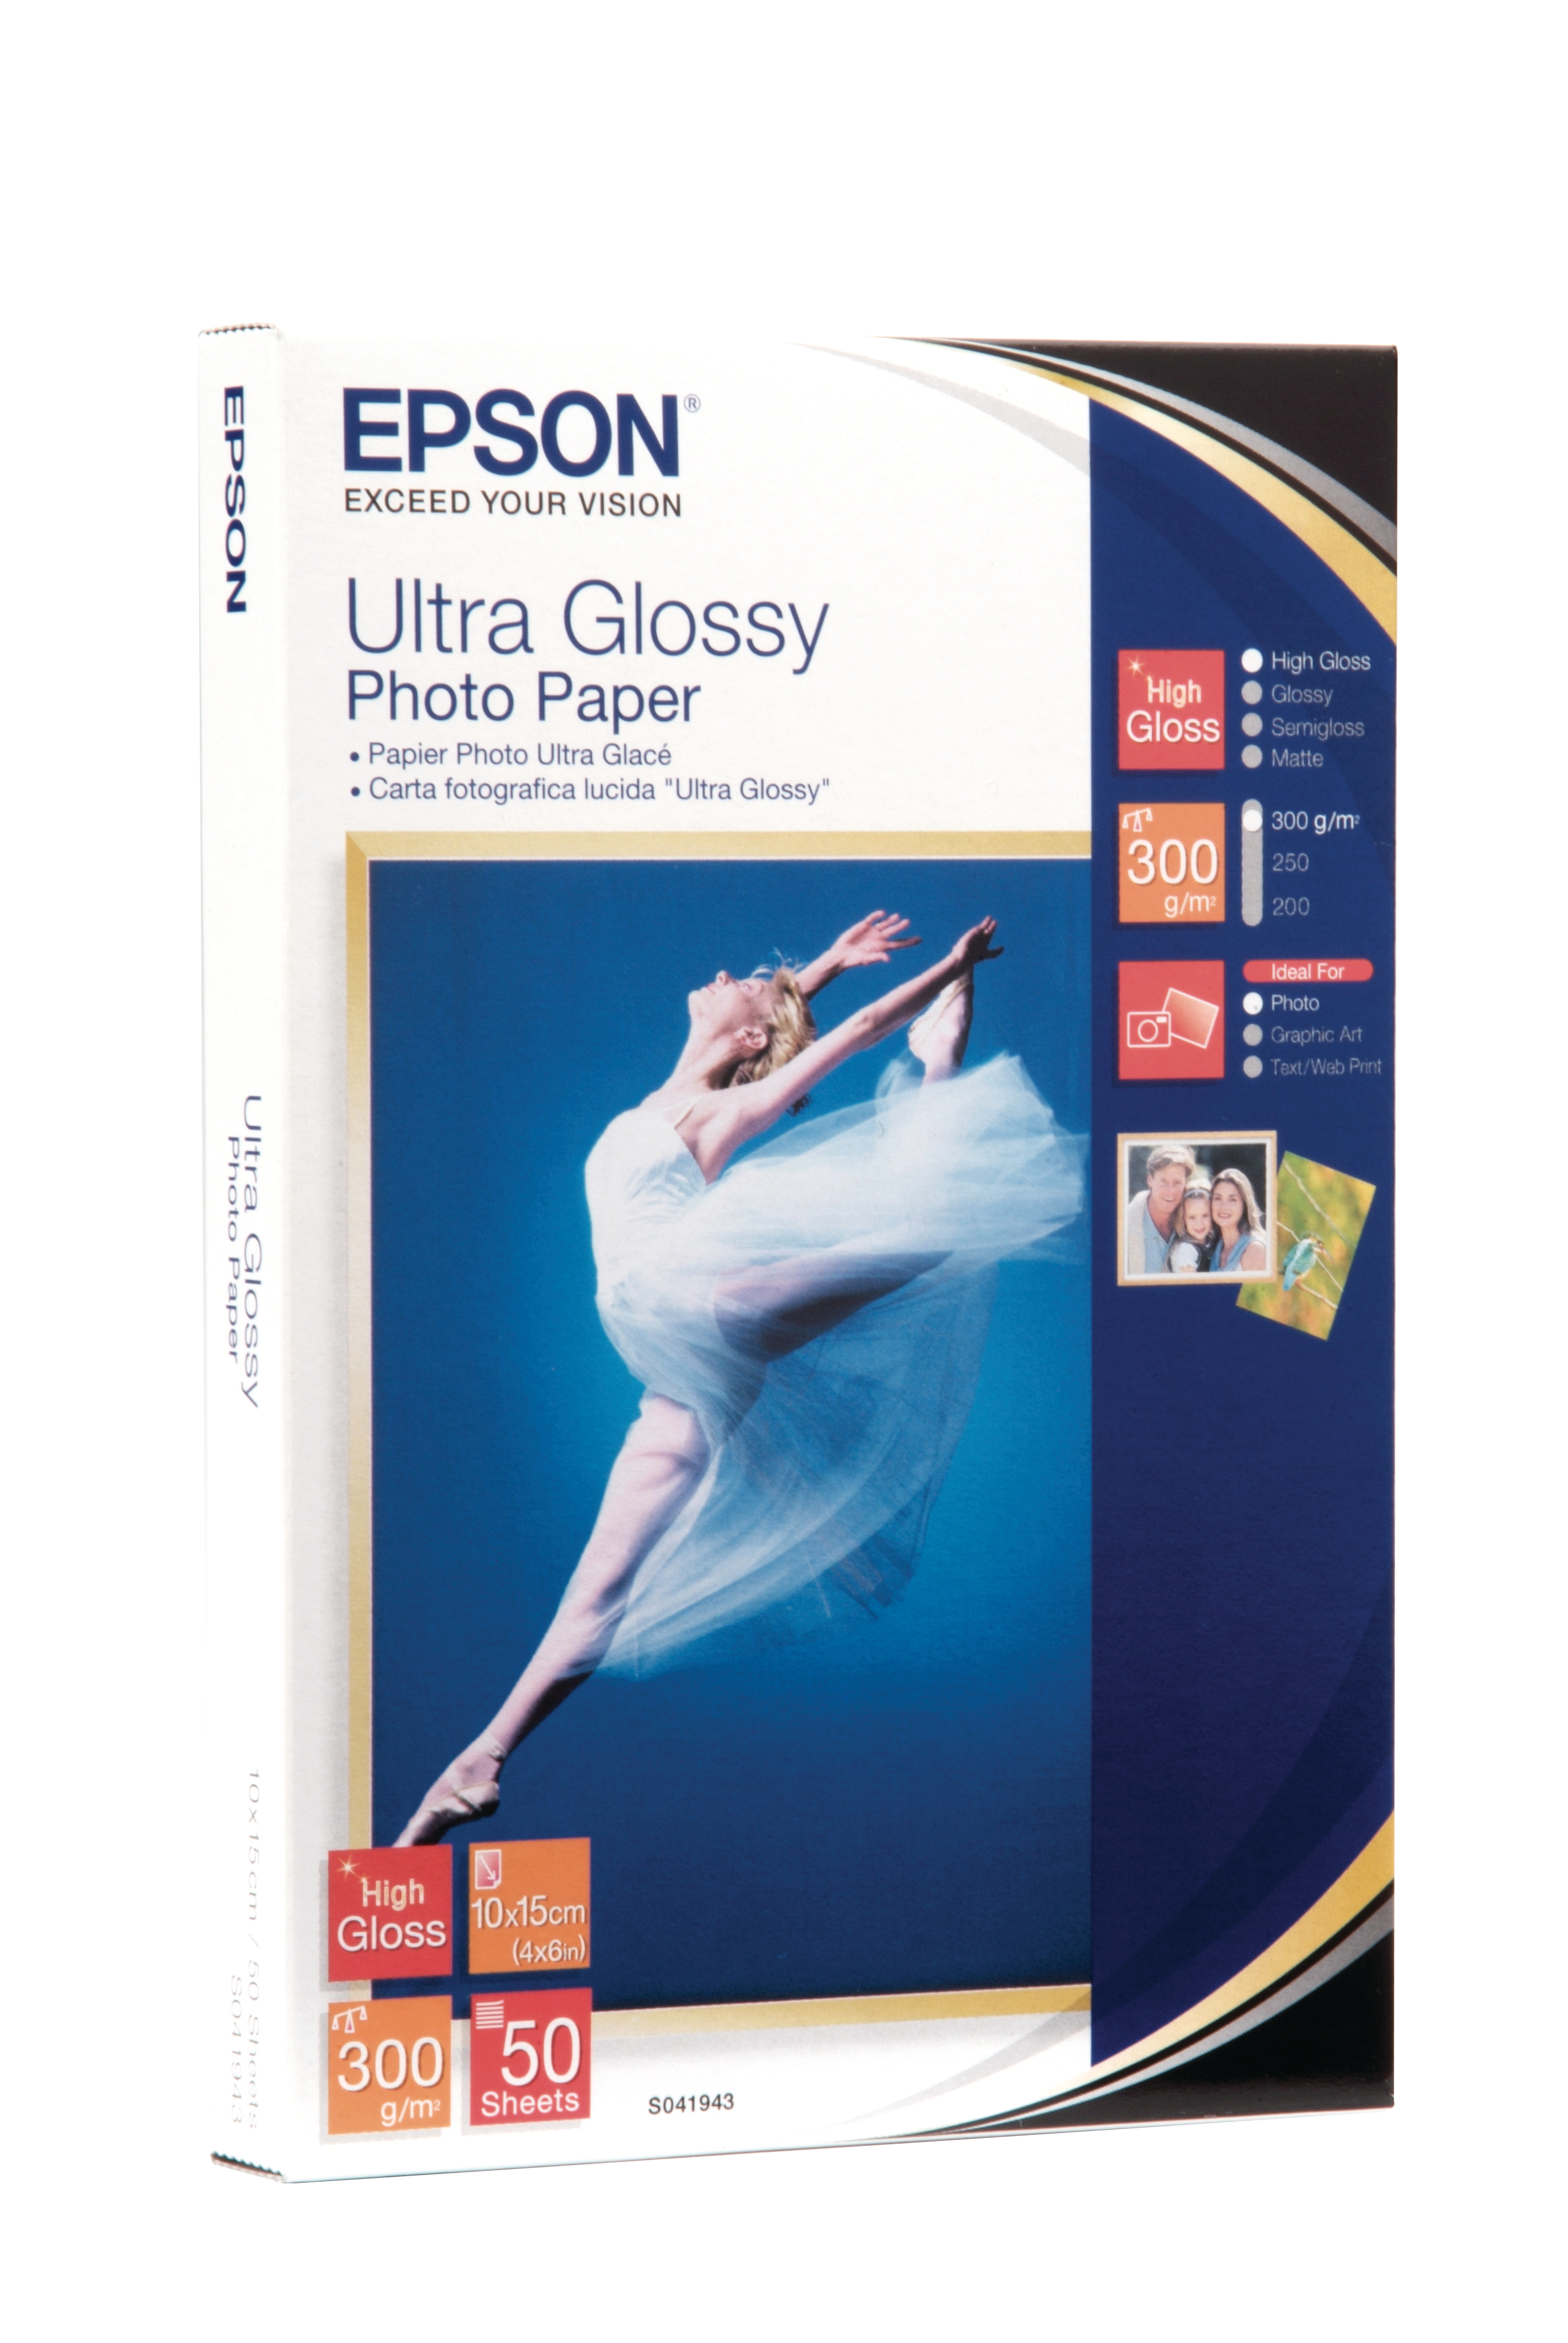 EPSON Ultra Glossy Photo 10x15cm S041943 Stylus DX 3800 300g 50 flls.